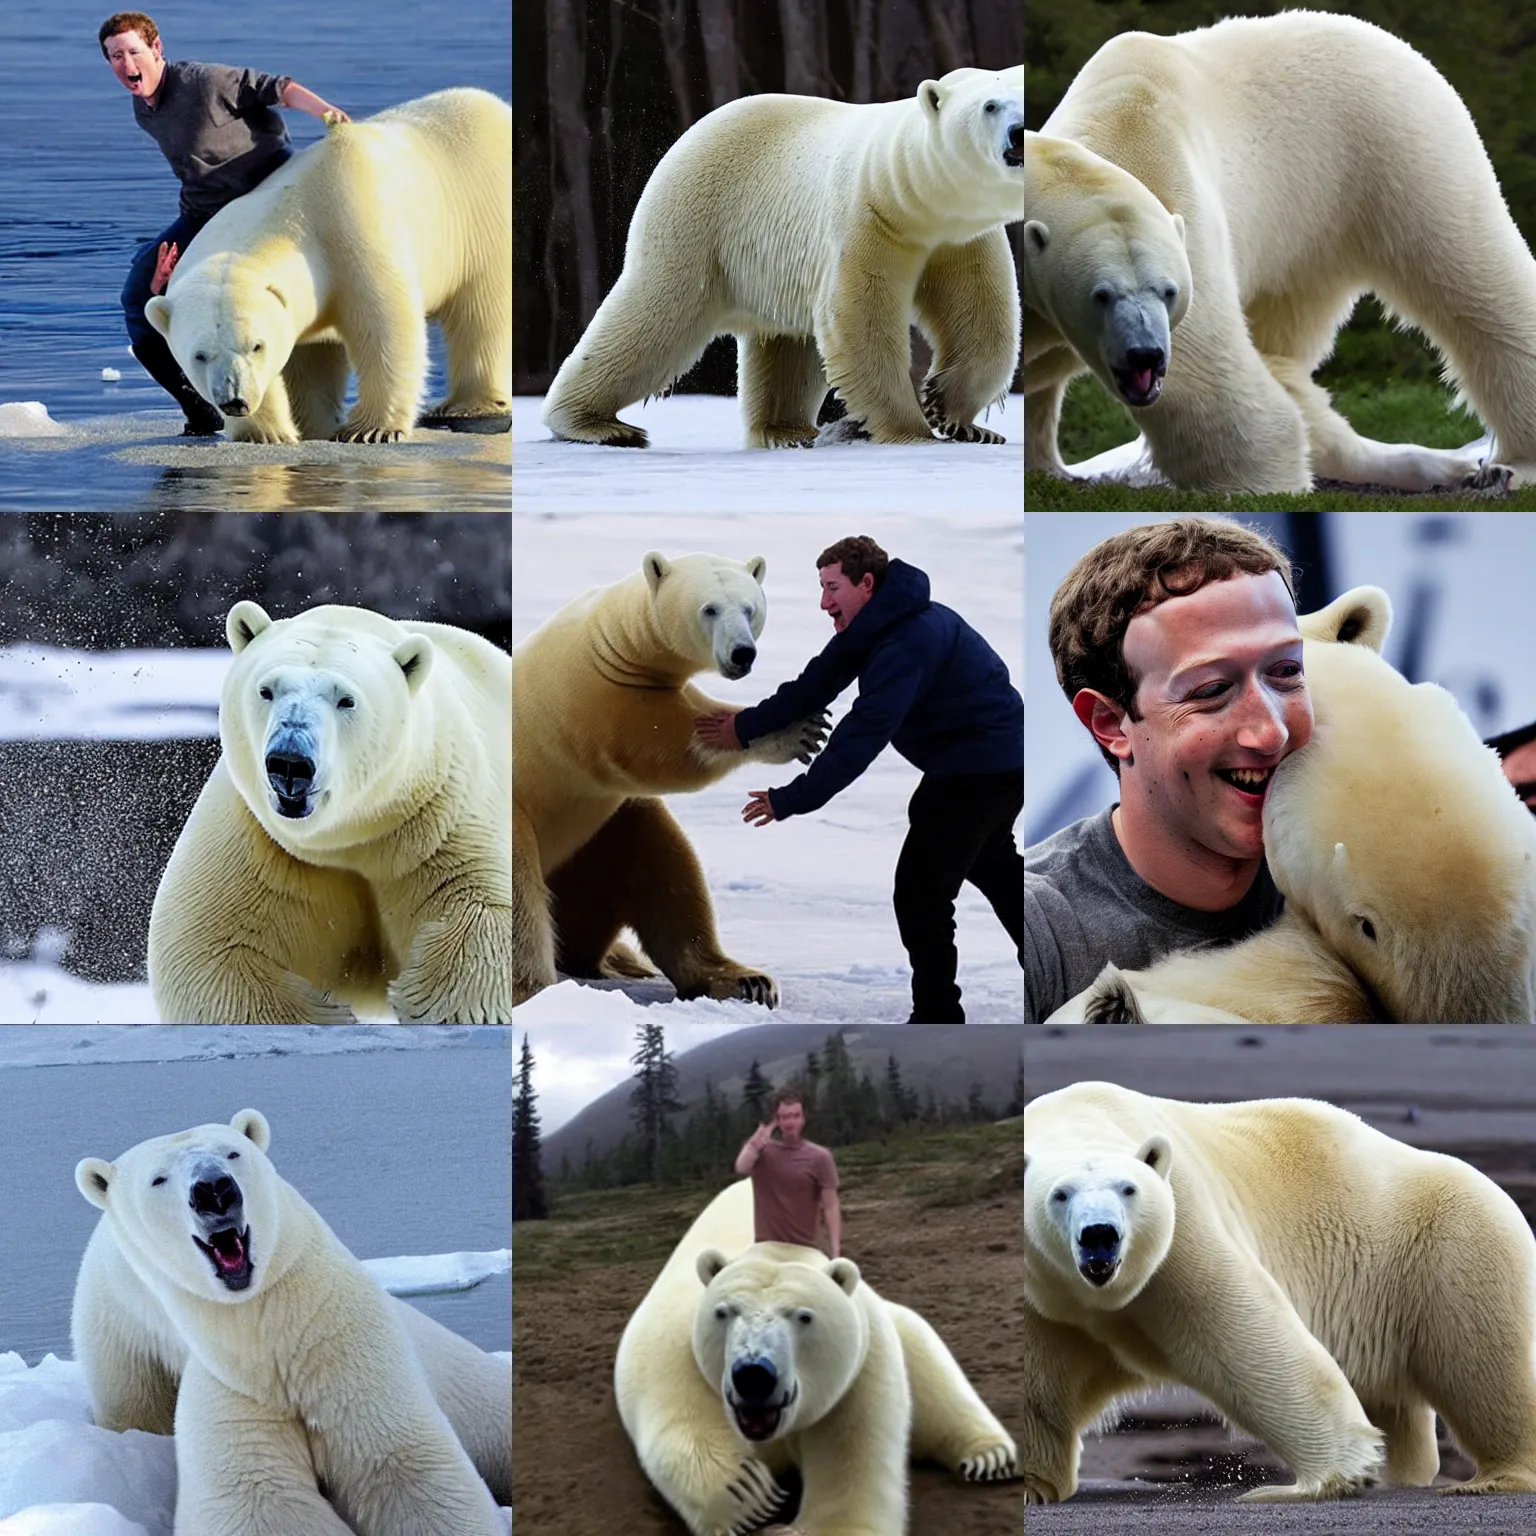 Prompt: mark Zuckerberg attacked by a polar bear, photo